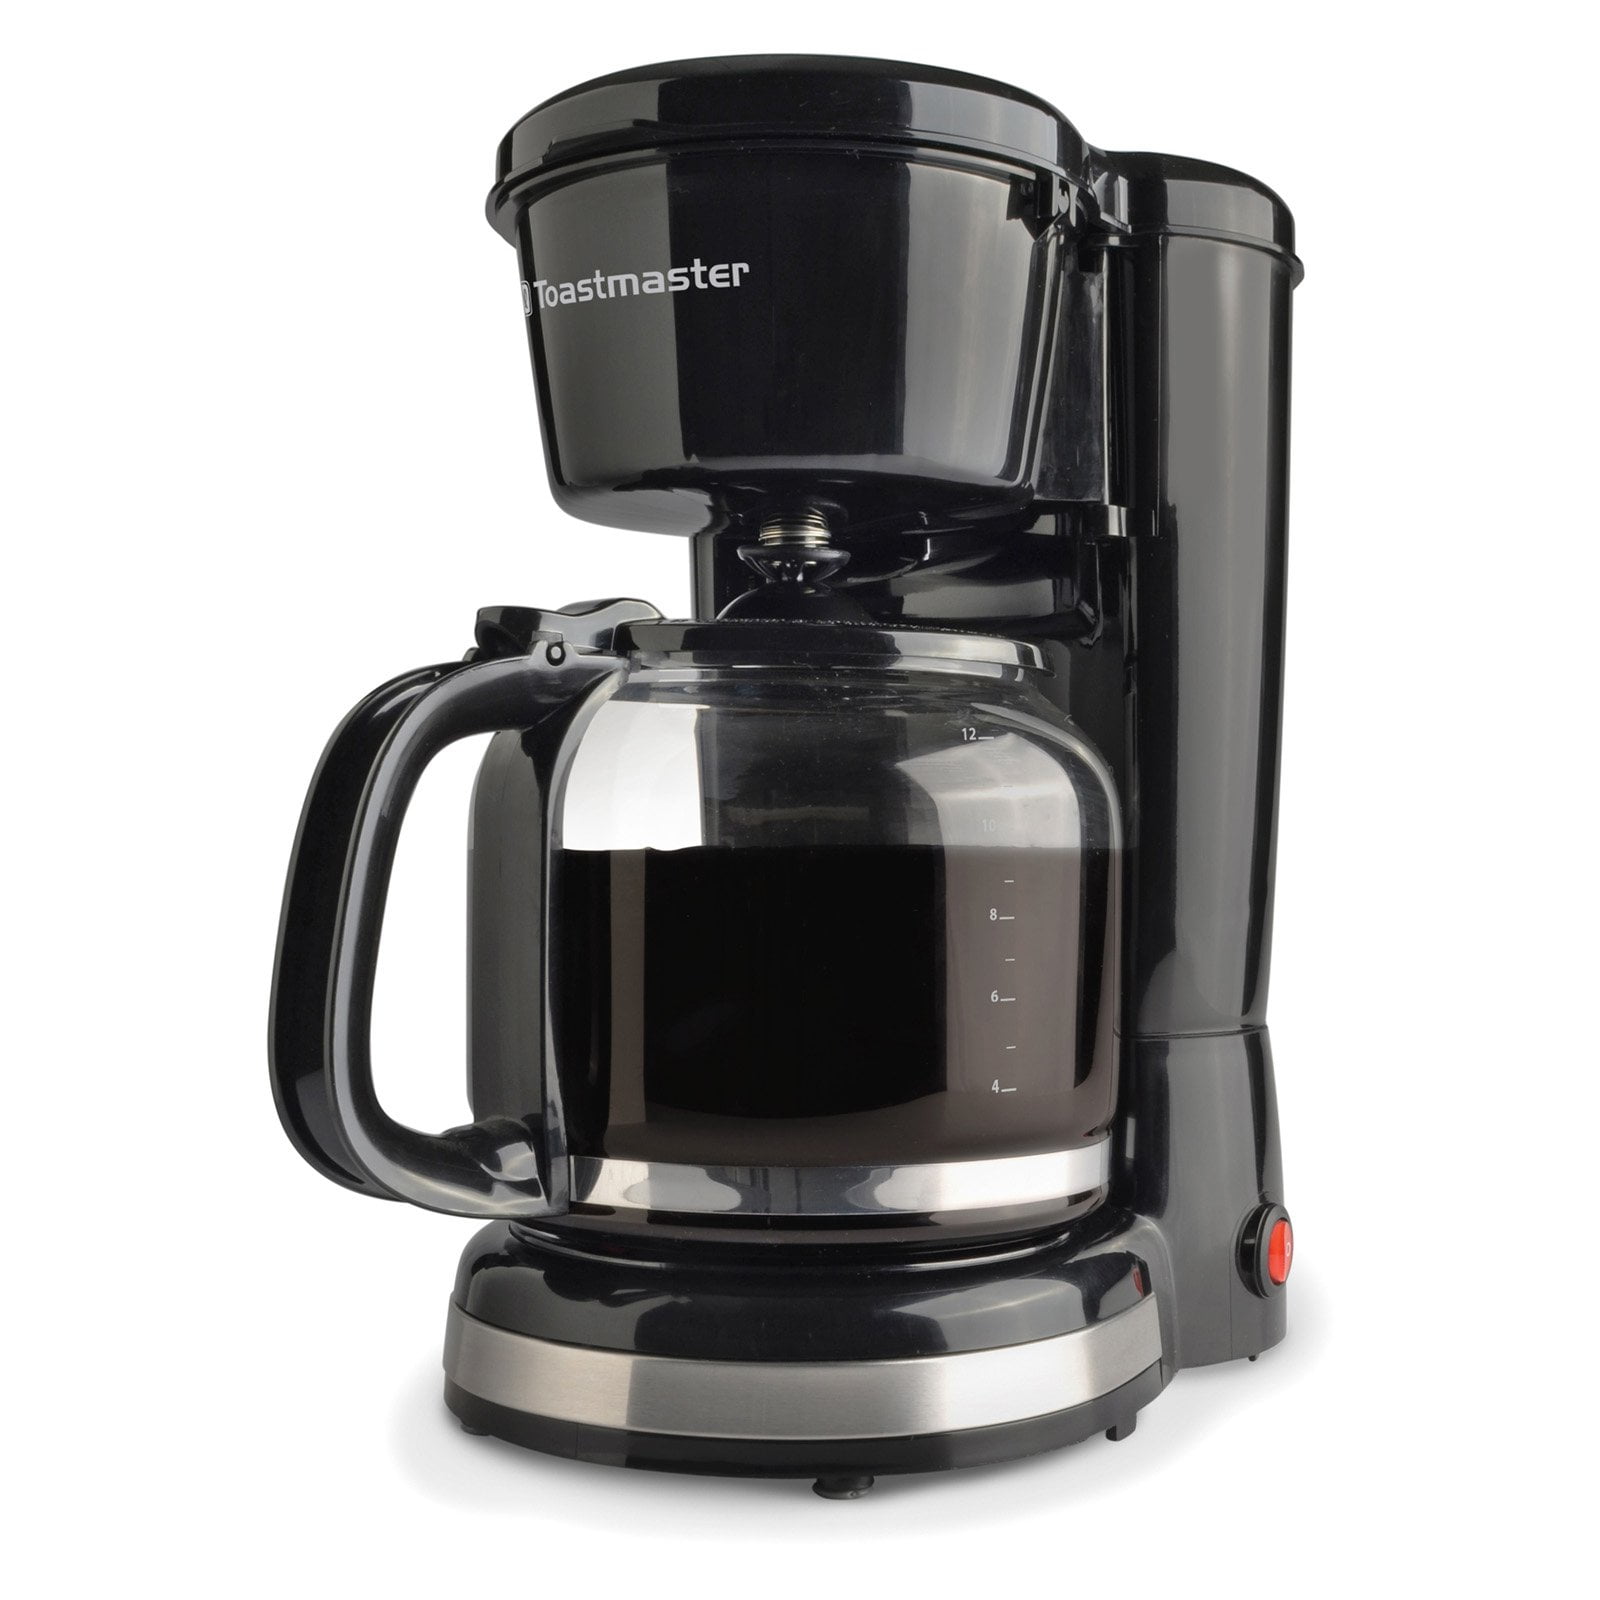 Toastmaster 12-Cup Coffee Maker, TM-122CM, Black